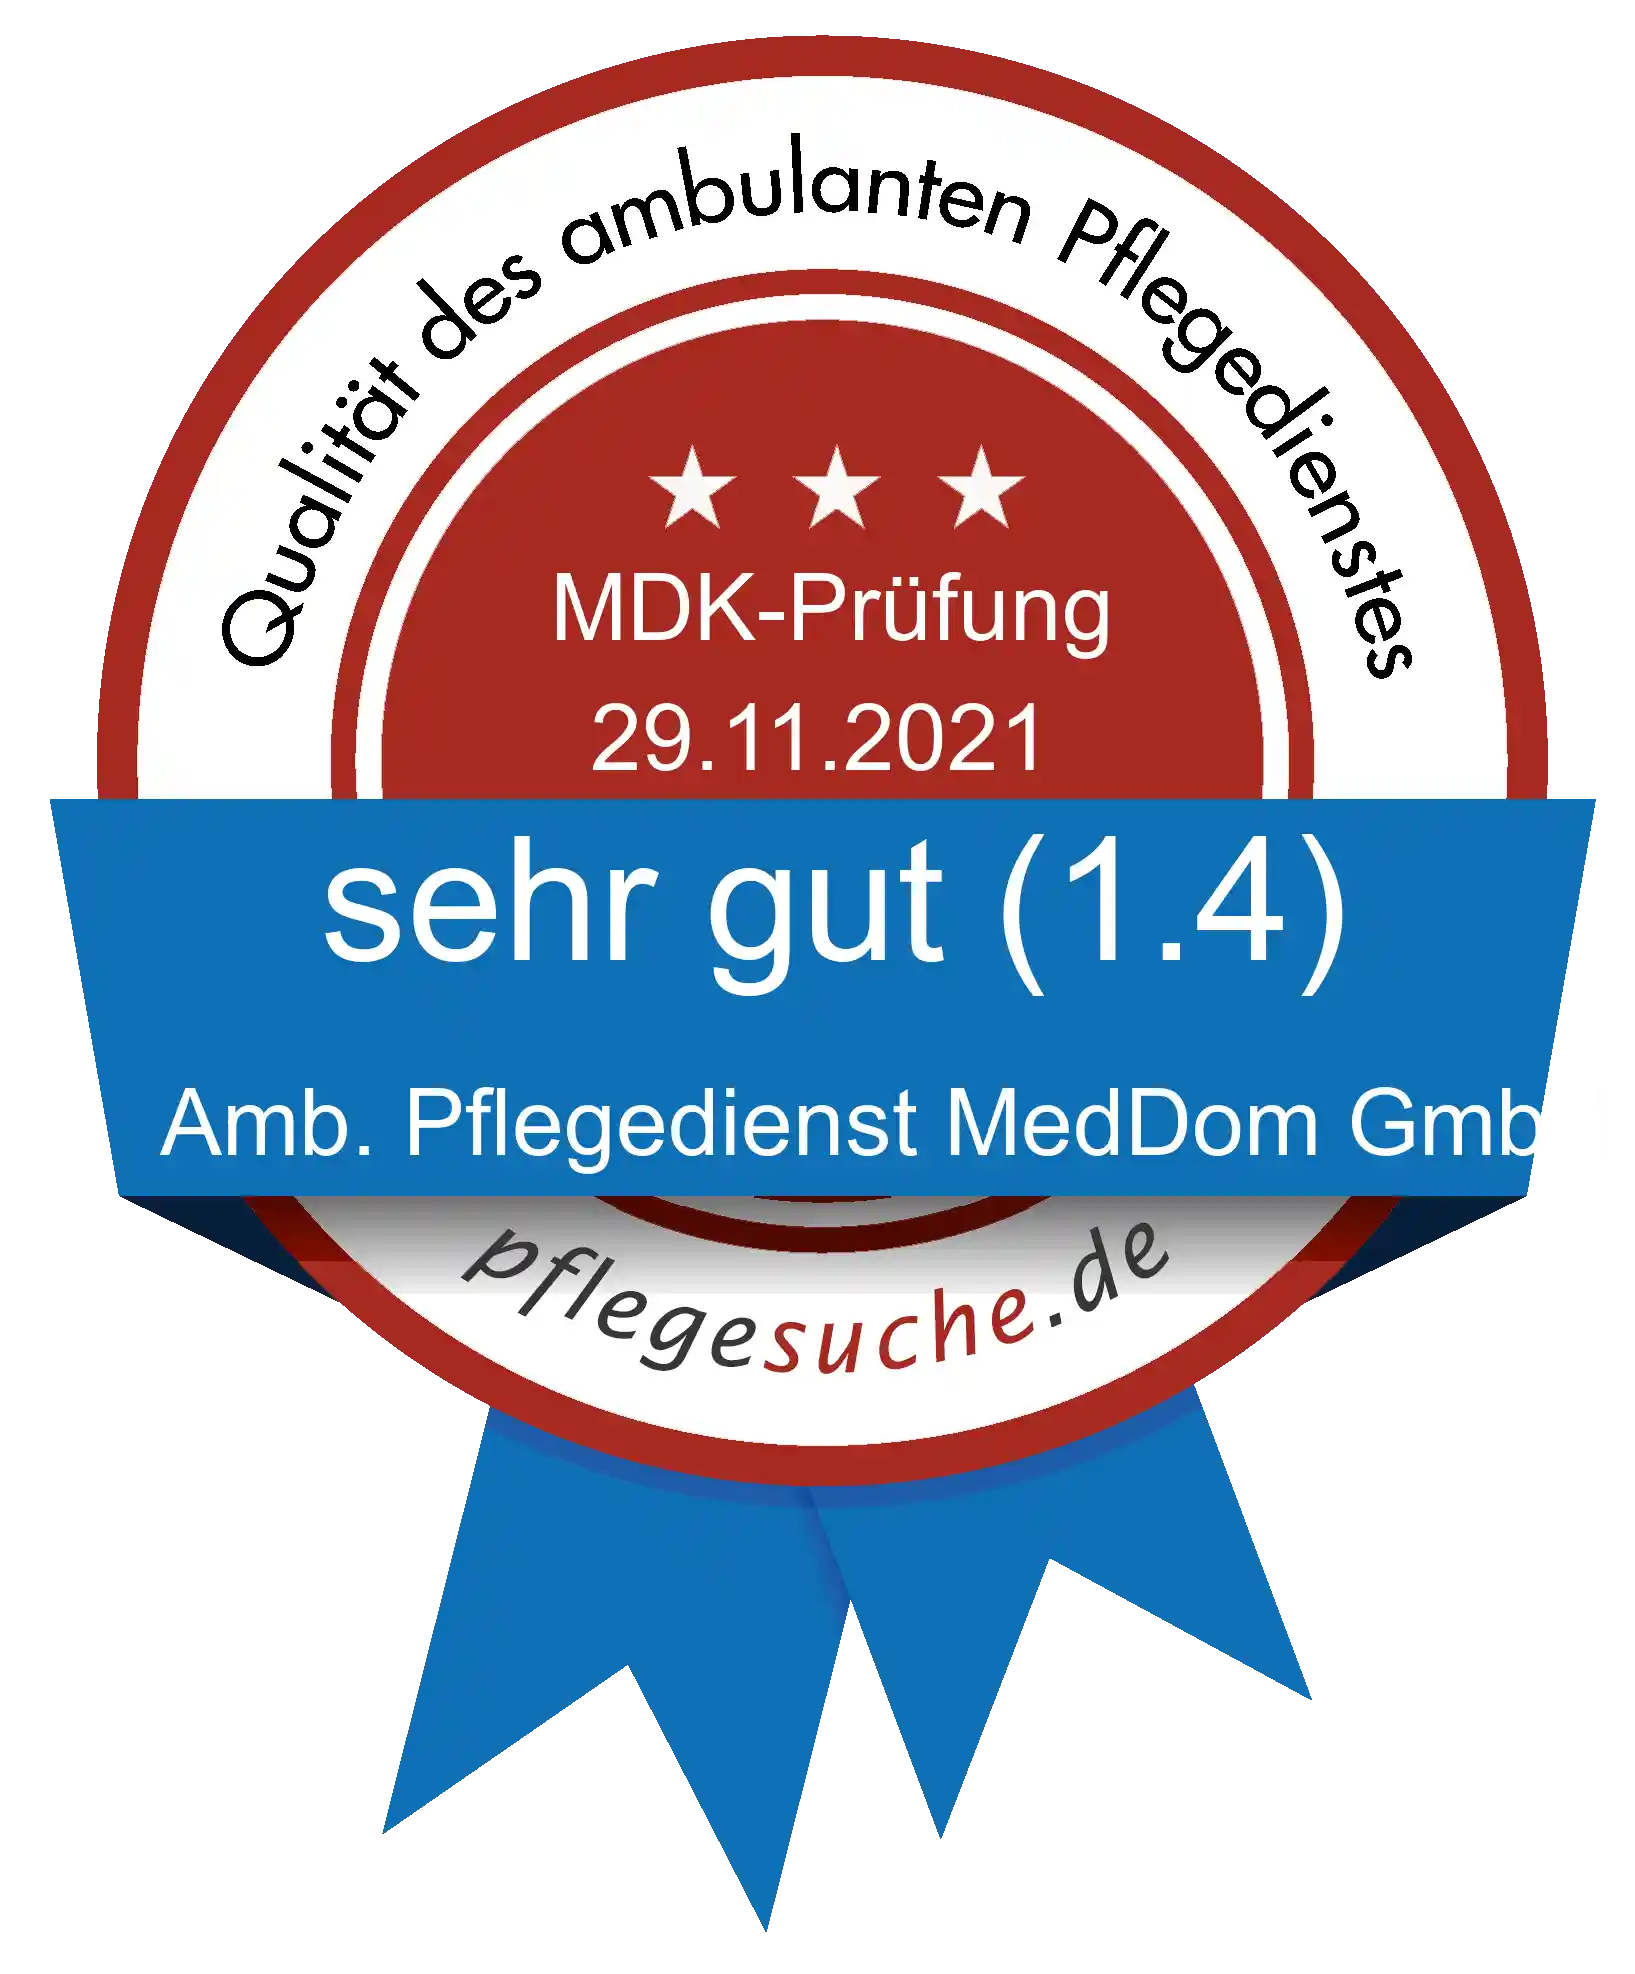 Siegel Benotung: Amb. Pflegedienst MedDom GmbH